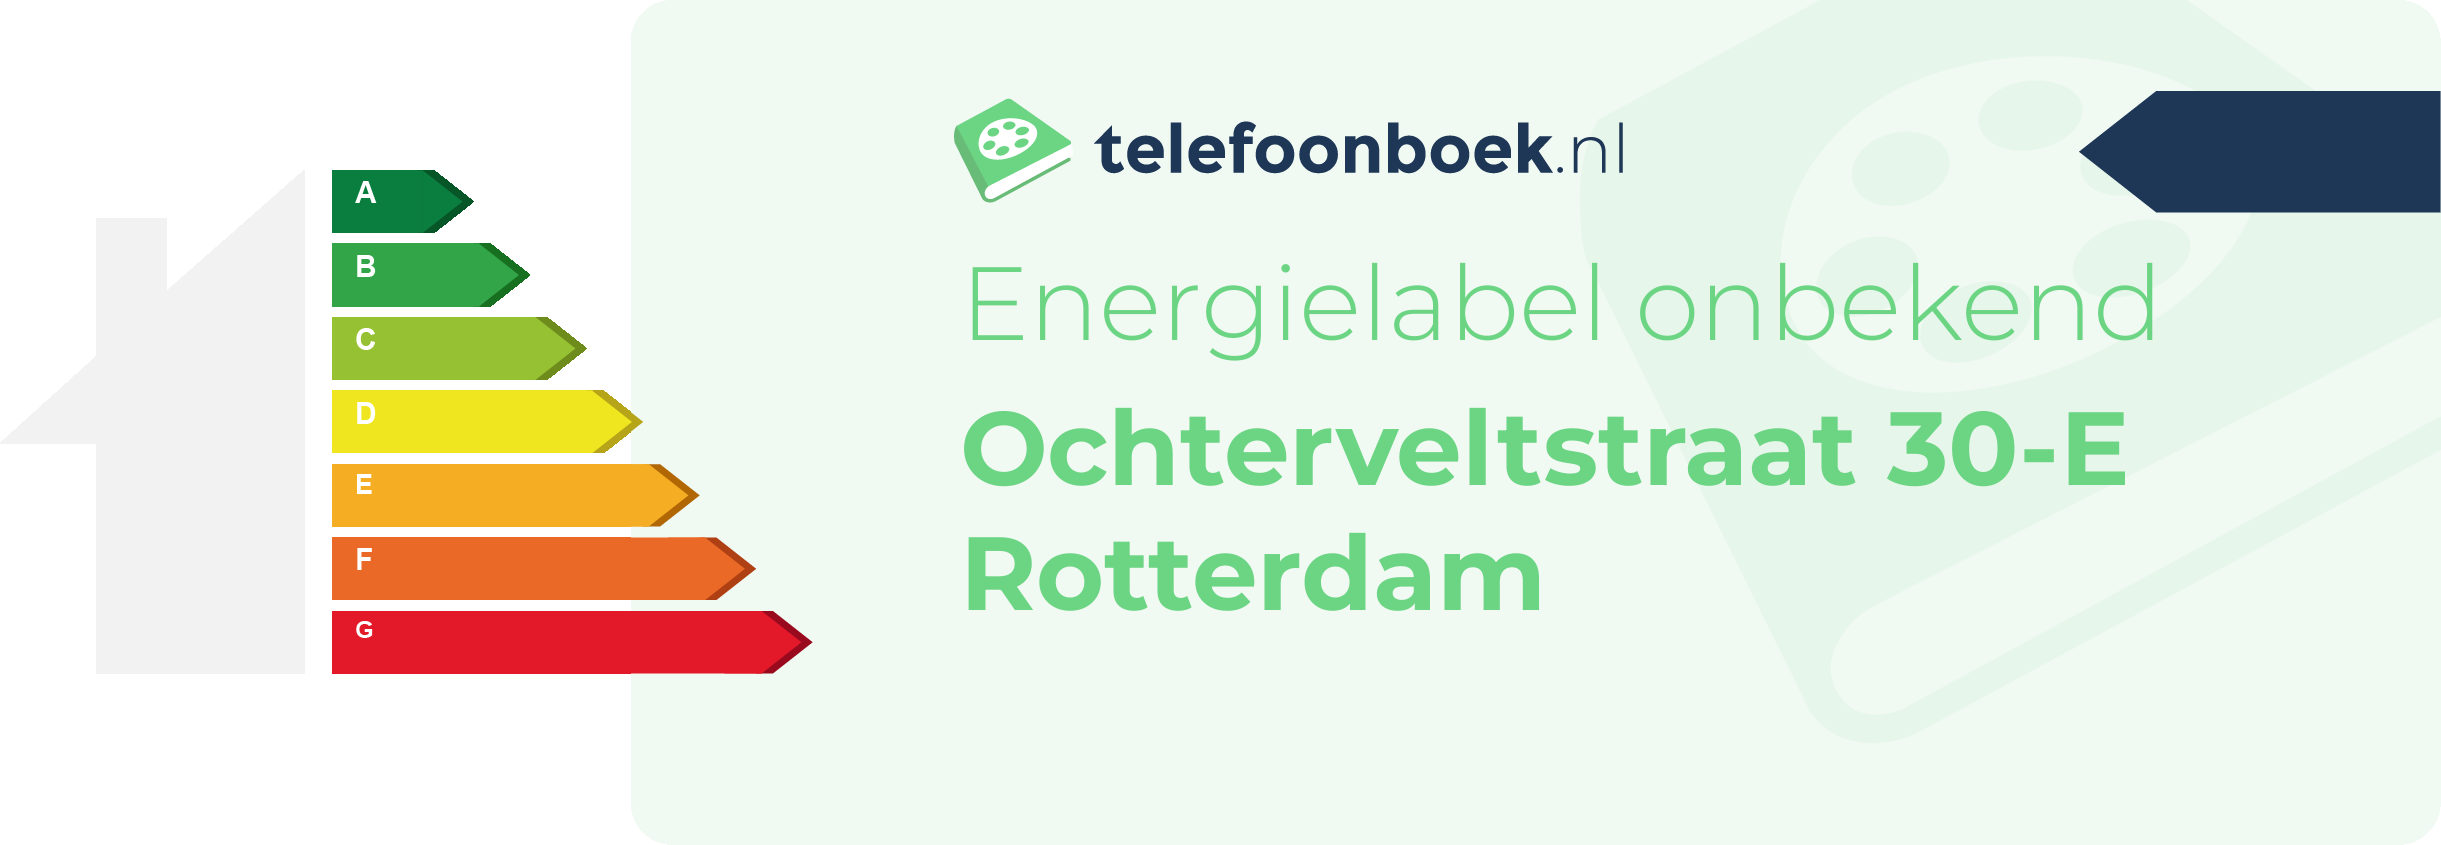 Energielabel Ochterveltstraat 30-E Rotterdam